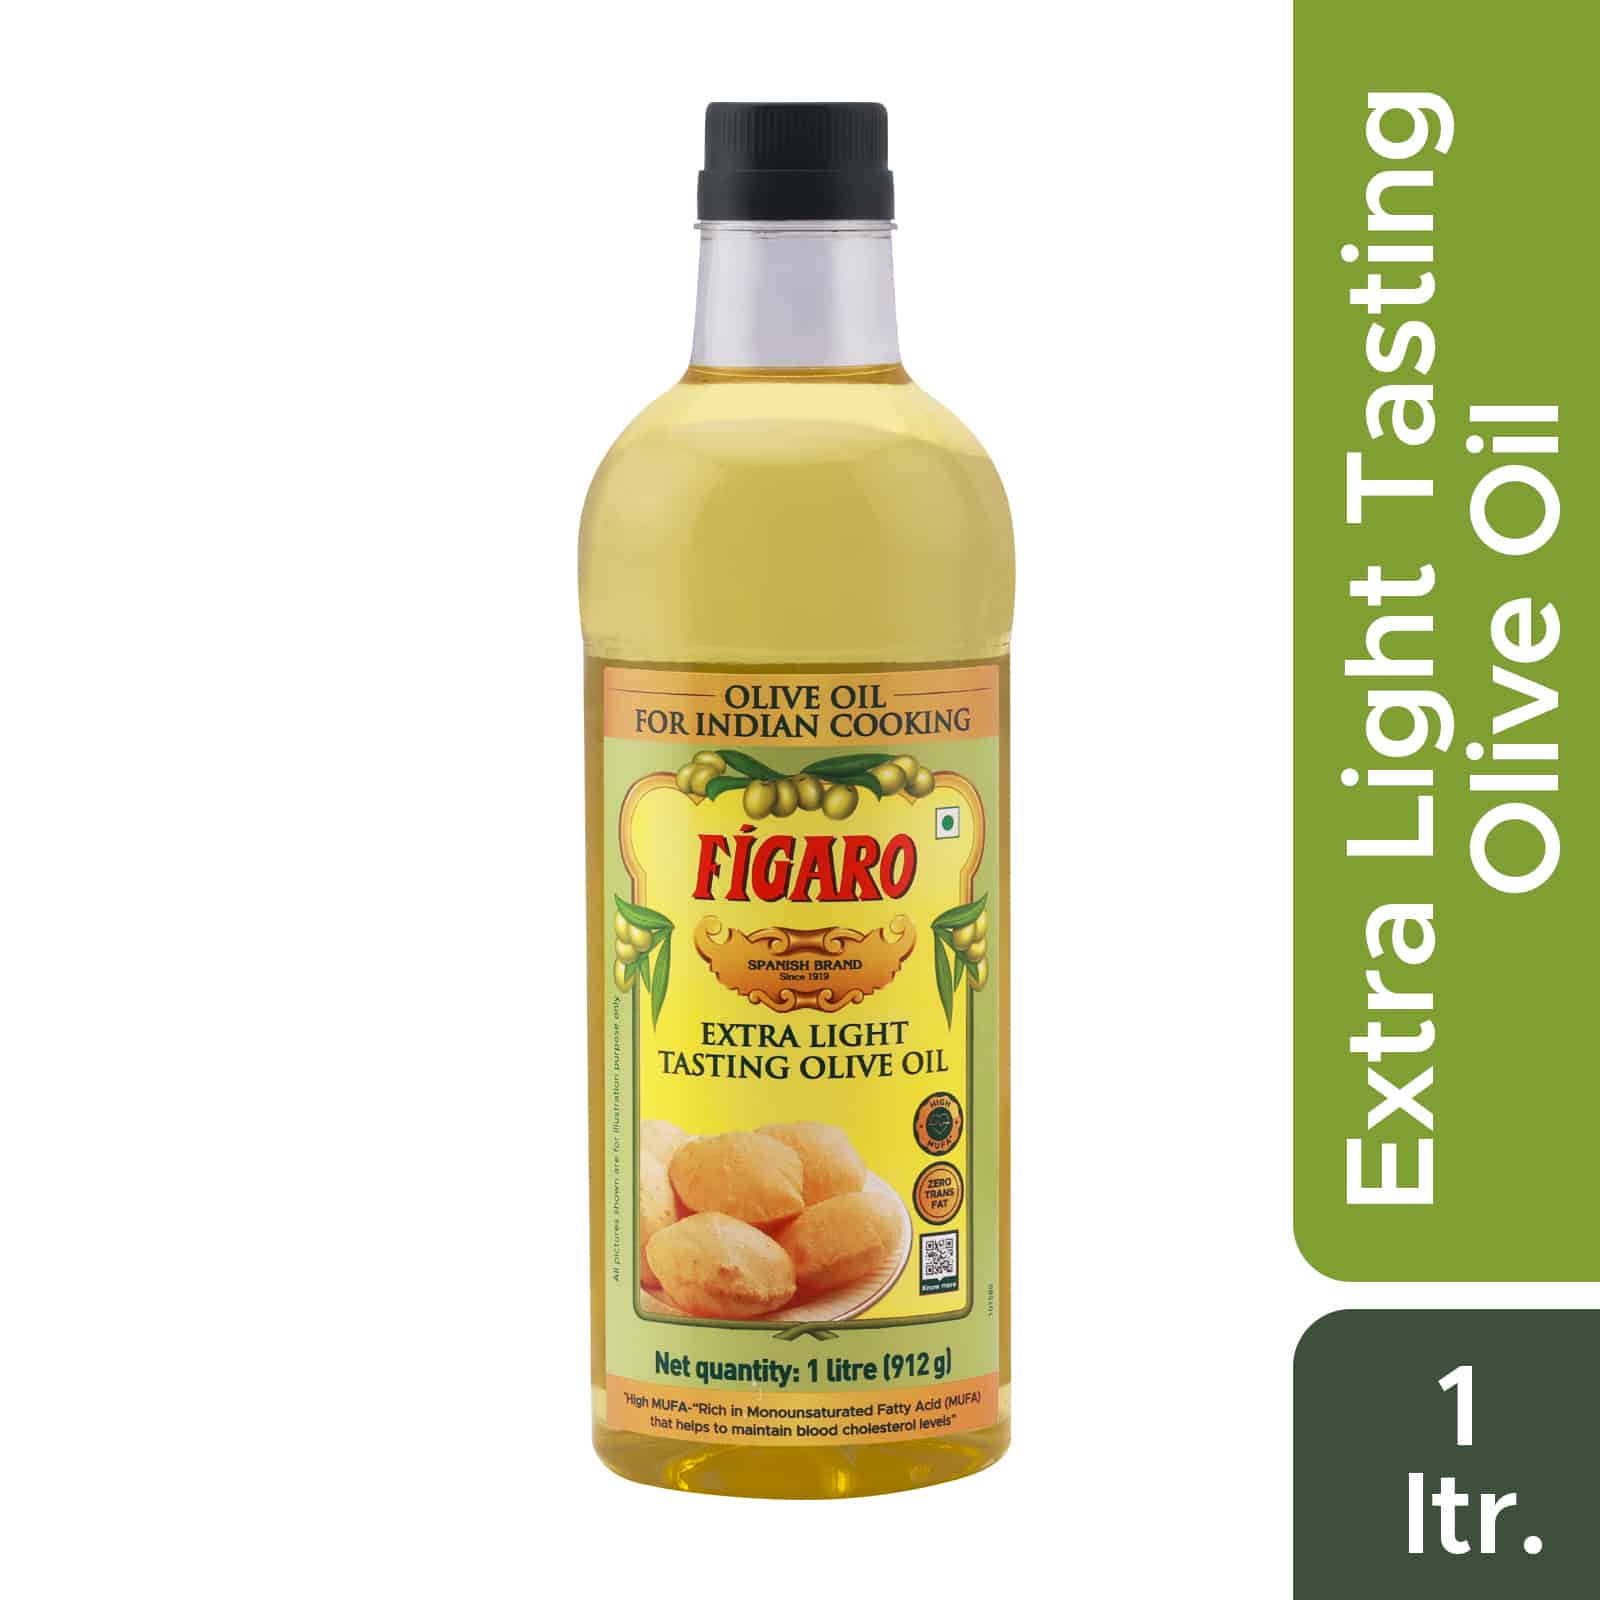 Figaro extra light tasting olive oil – 1L PRODUCT ID: 3646